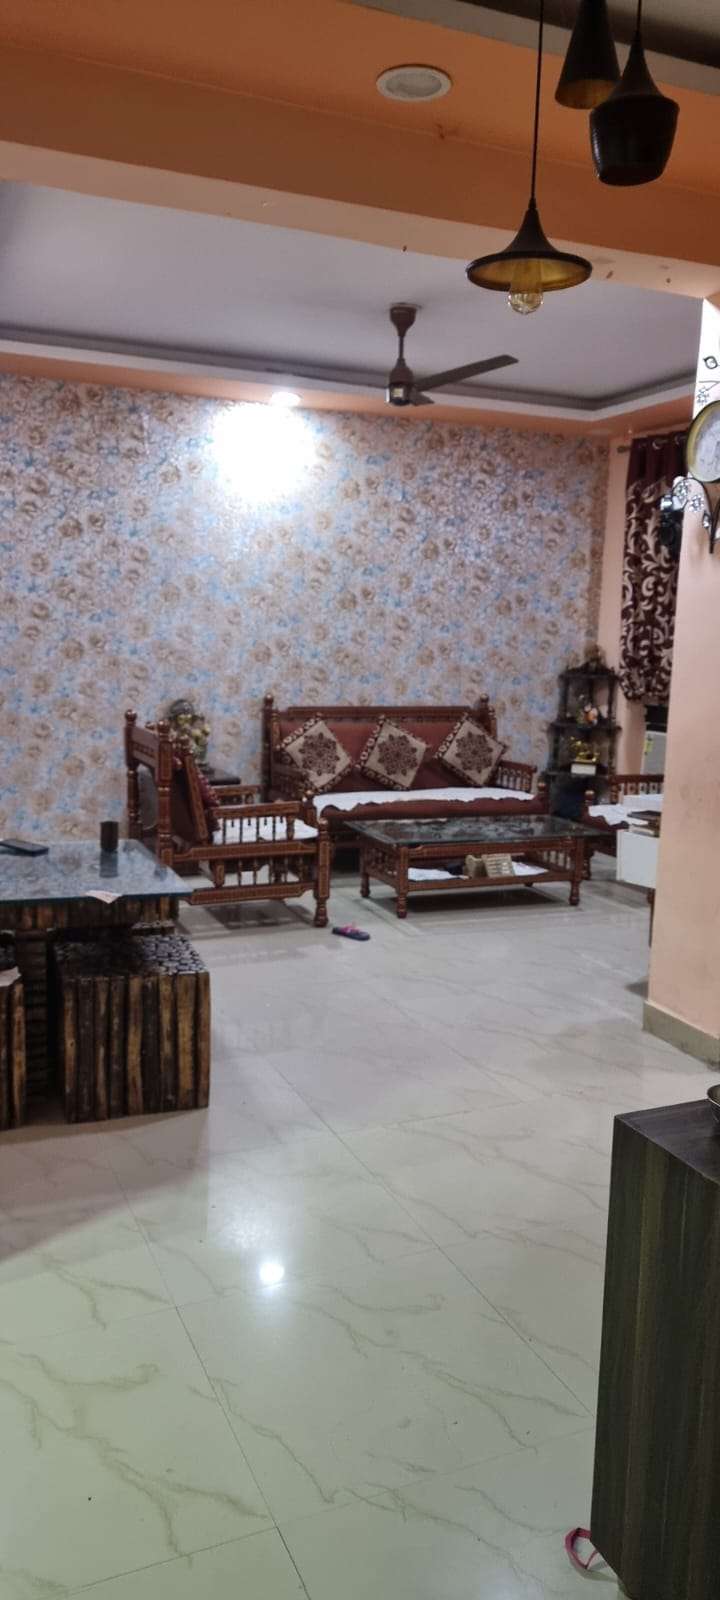 2.5 Bedroom 1210 Sq.Ft. Apartment in Sector 78 Noida